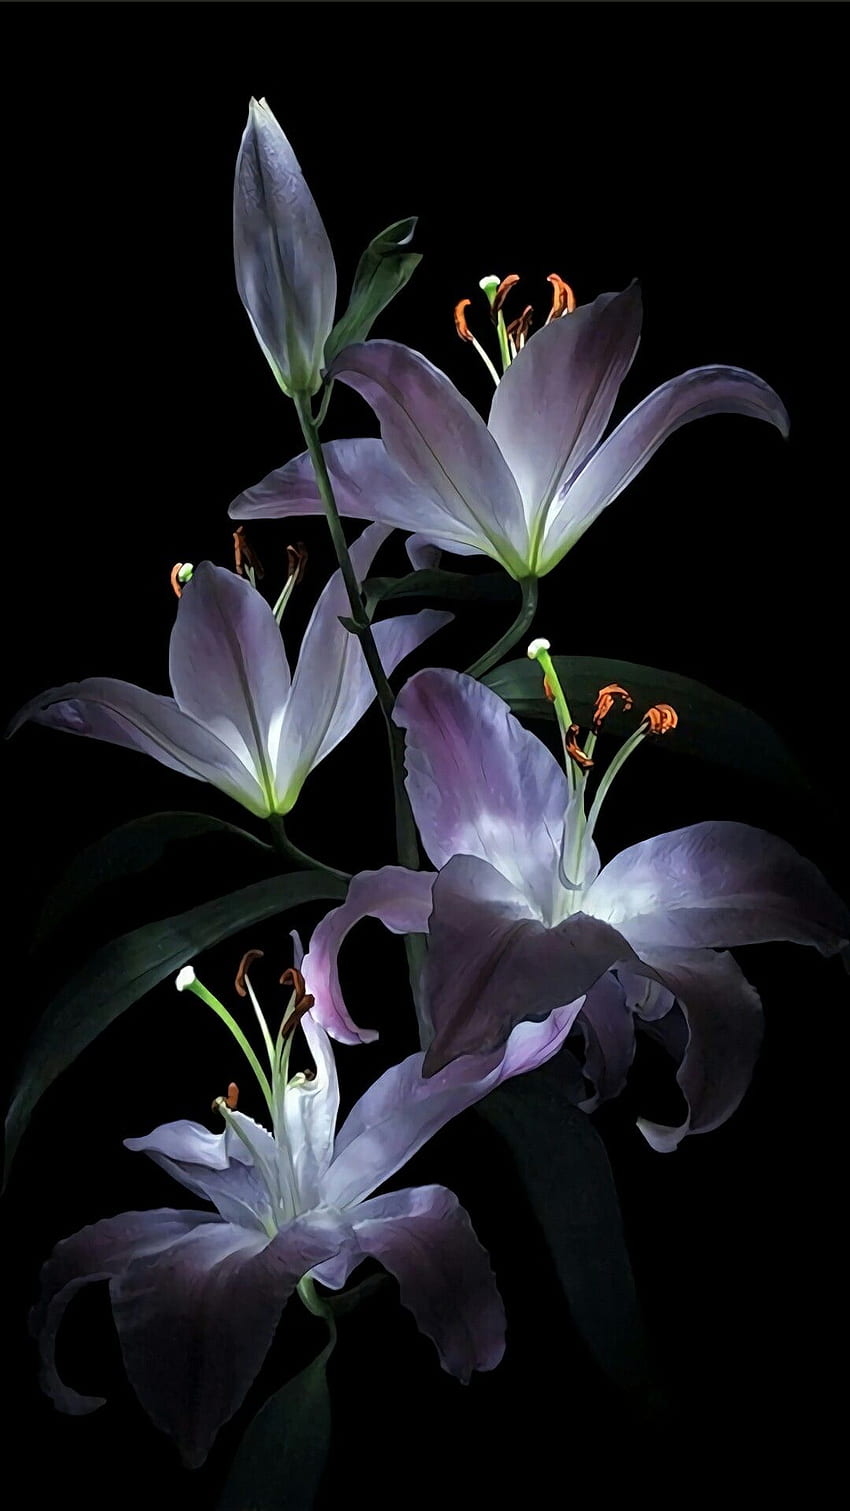 Full HD 1080p Lily Wallpapers HD, Desktop Backgrounds 1920x1080 ... |  Flower images wallpapers, Lily wallpaper, Flowers black background